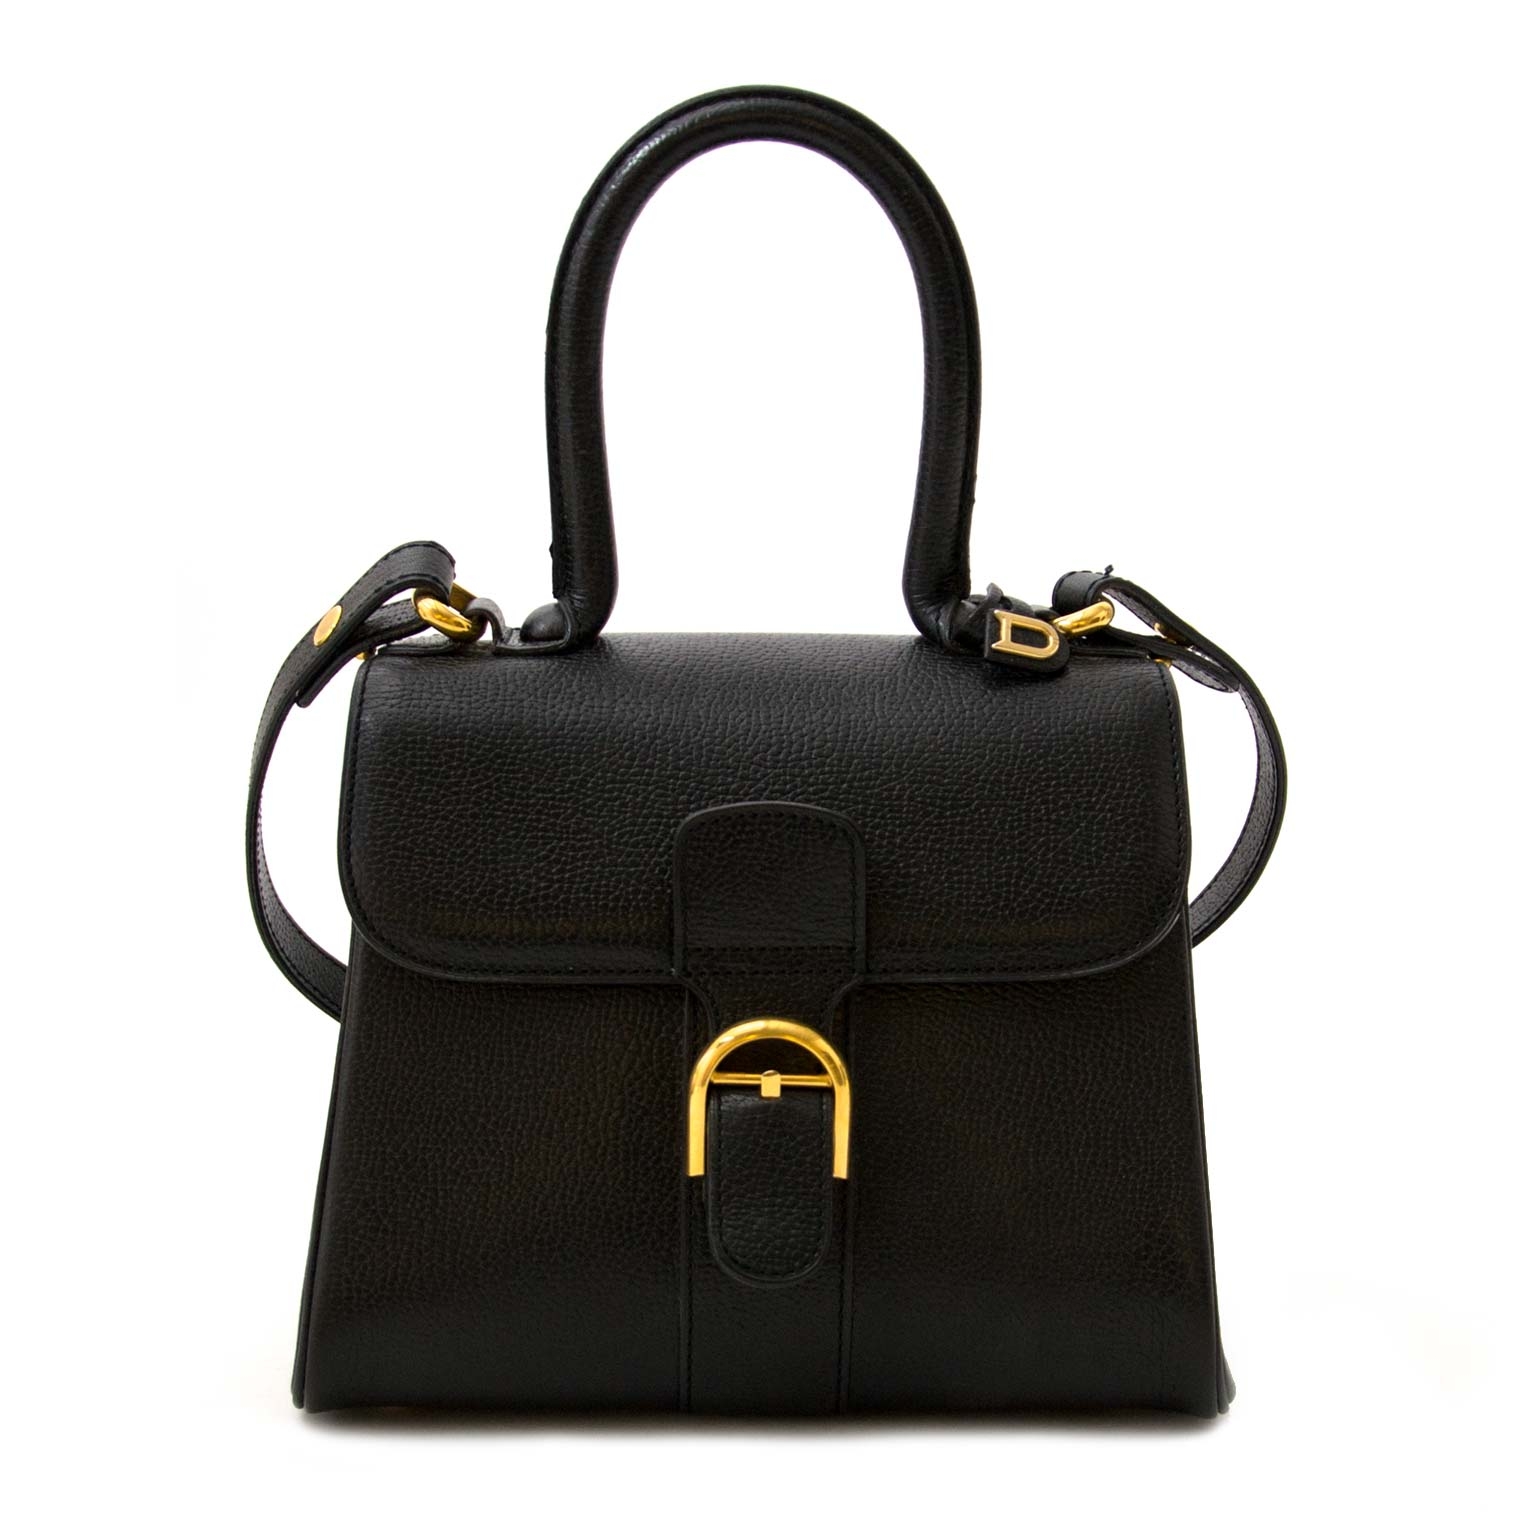 Delvaux Black Le Madame Mini Polo ○ Labellov ○ Buy and Sell Authentic Luxury